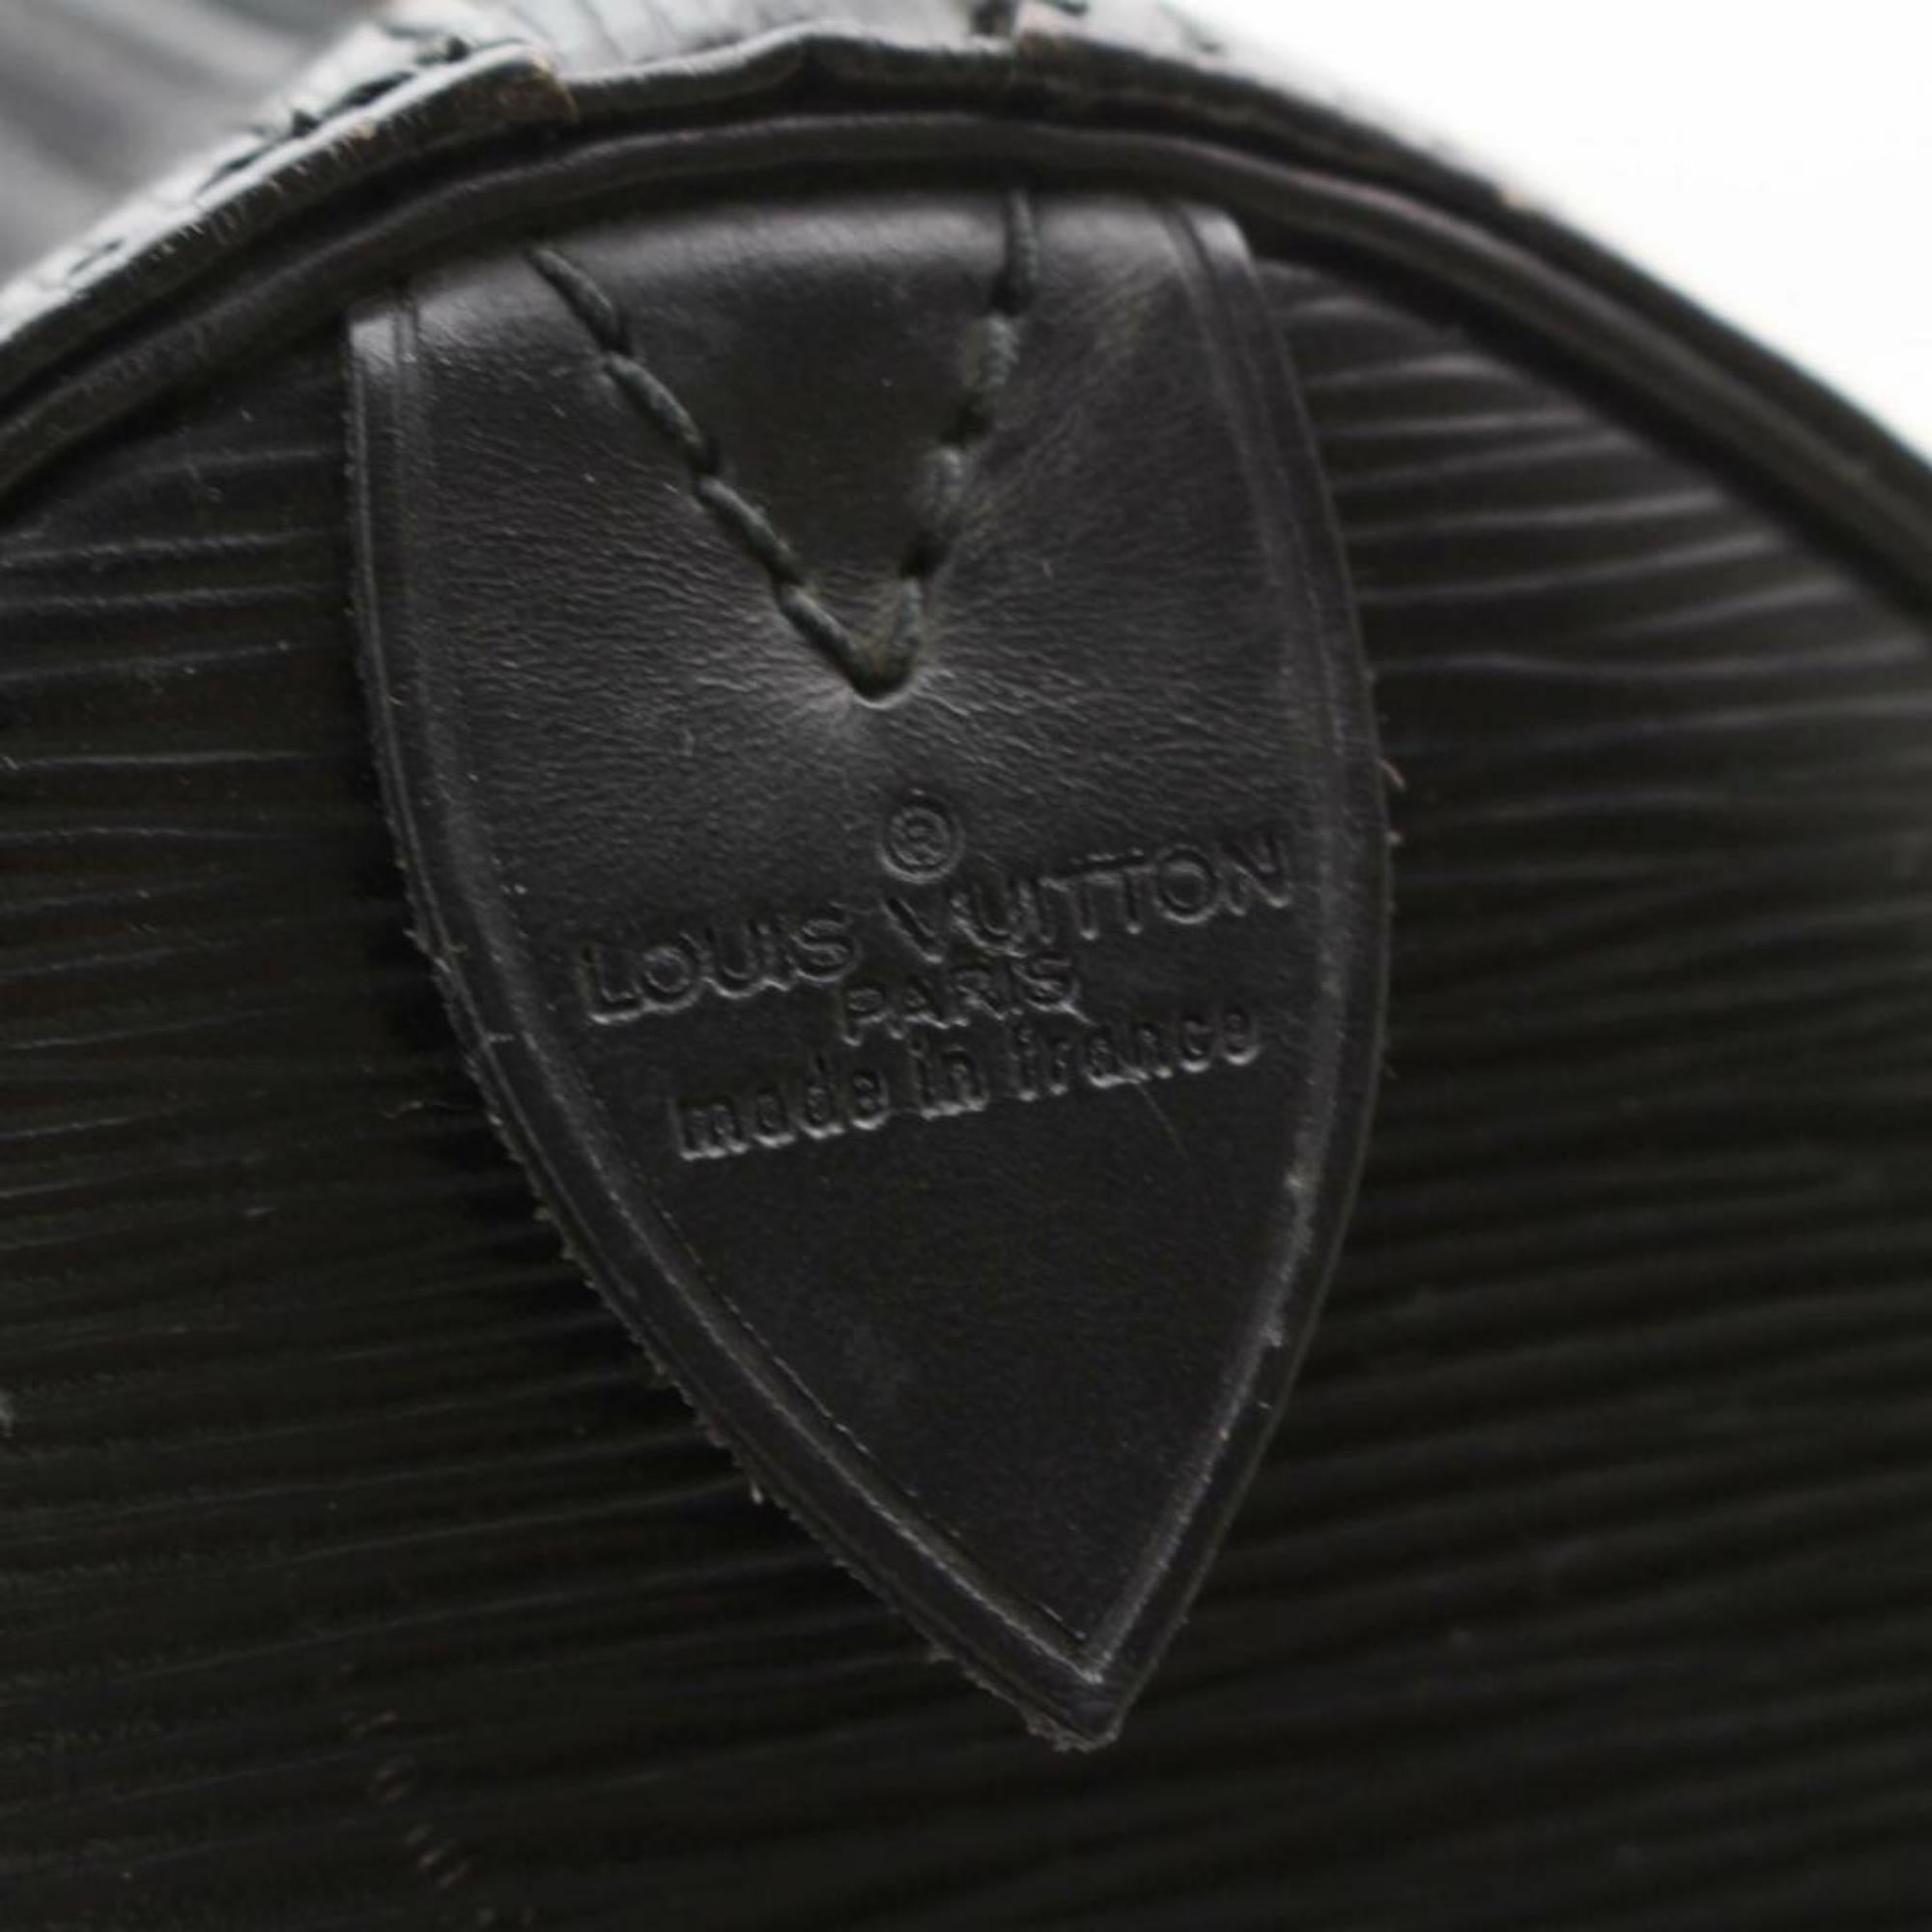 Women's Louis Vuitton Keepall Duffle Noir 45 870140 Black Leather Weekend/Travel Bag For Sale